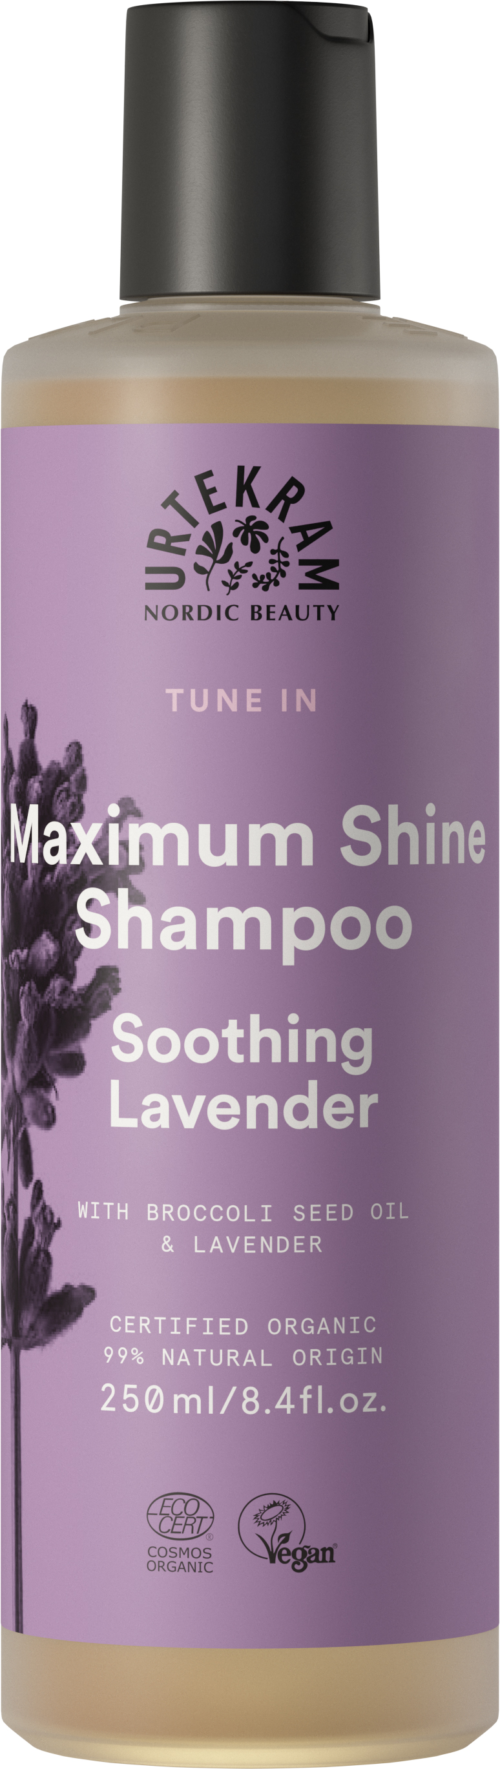 Tune in soothing lavender shampoo 250ml Urtekram